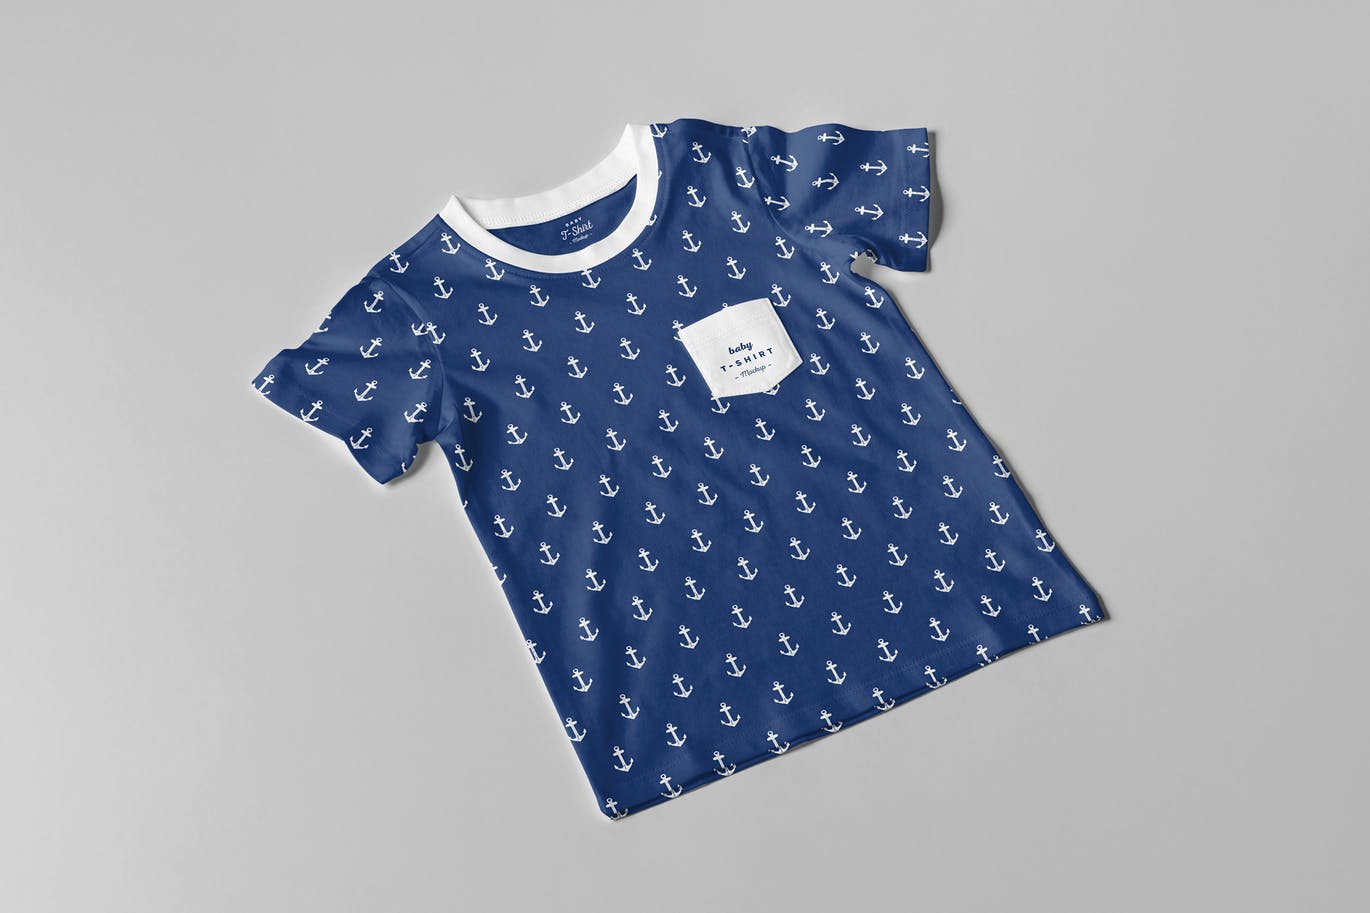 Blue baby t-shirt mockup templates